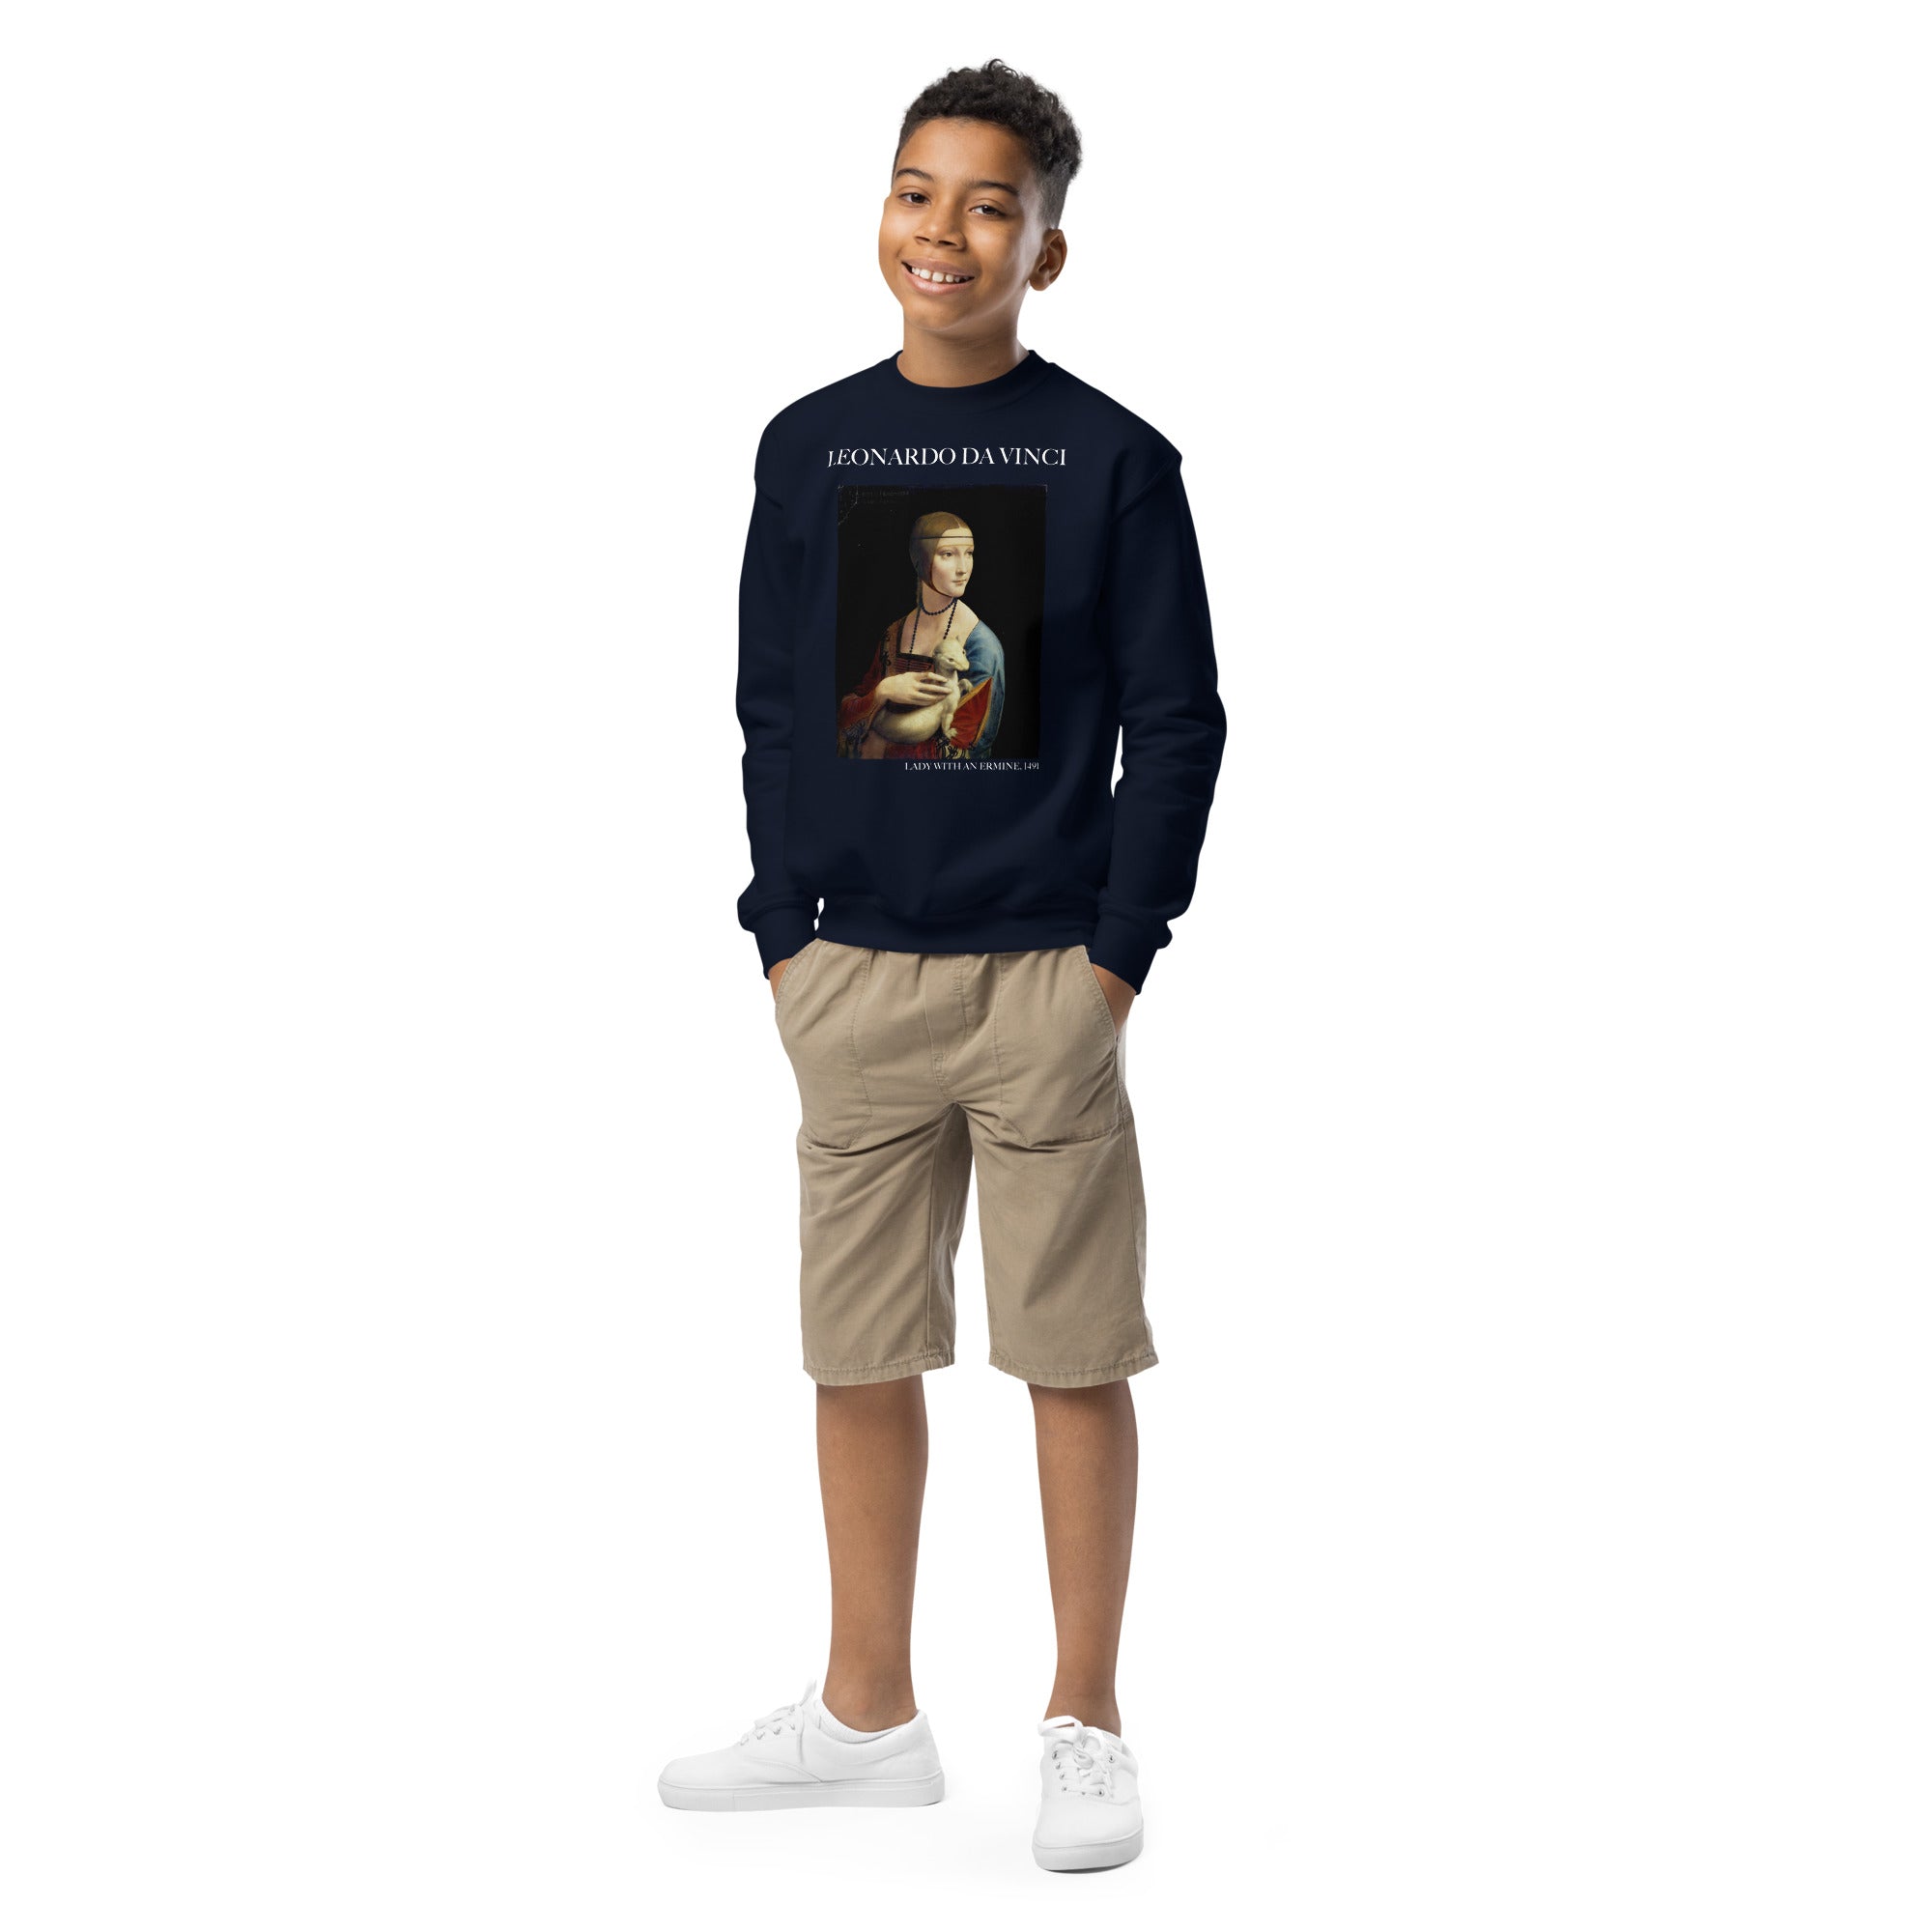 Leonardo da Vinci 'Lady with an Ermine' Famous Painting Crewneck Sweatshirt | Premium Youth Art Sweatshirt